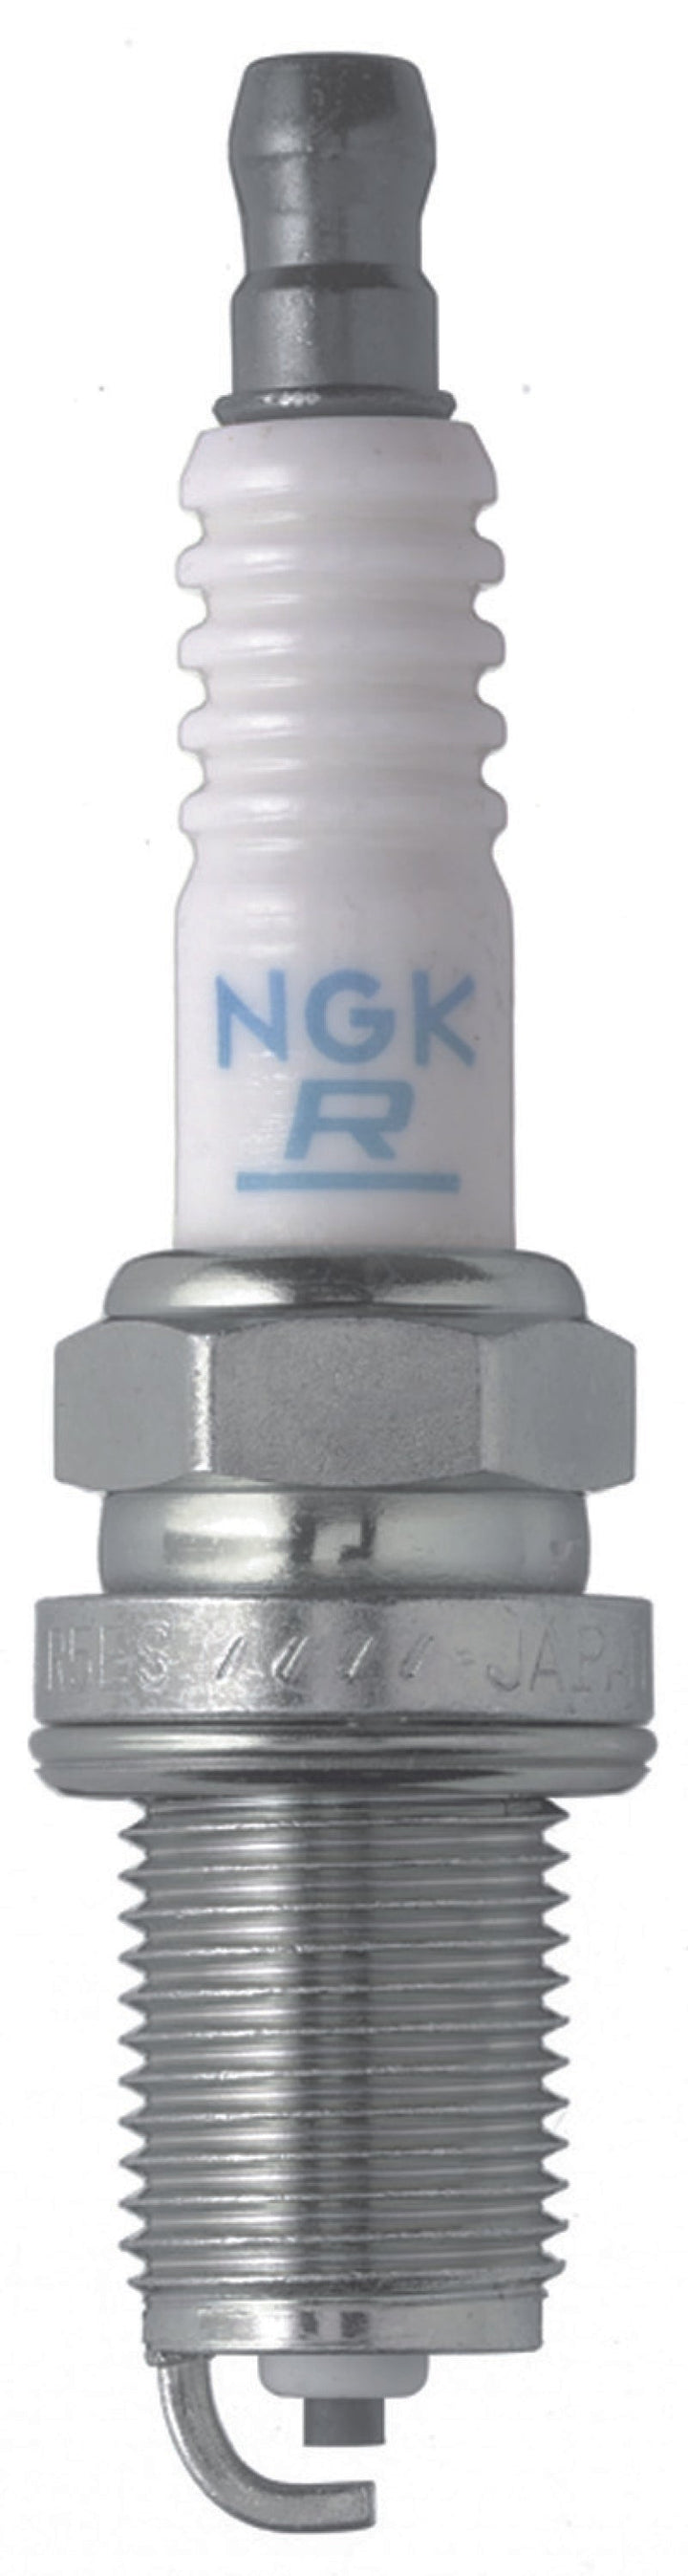 NGK V-Power Spark Plug Box of 4 (BKR7E-11) - Premium Spark Plugs from NGK - Just 41.87 SR! Shop now at Motors